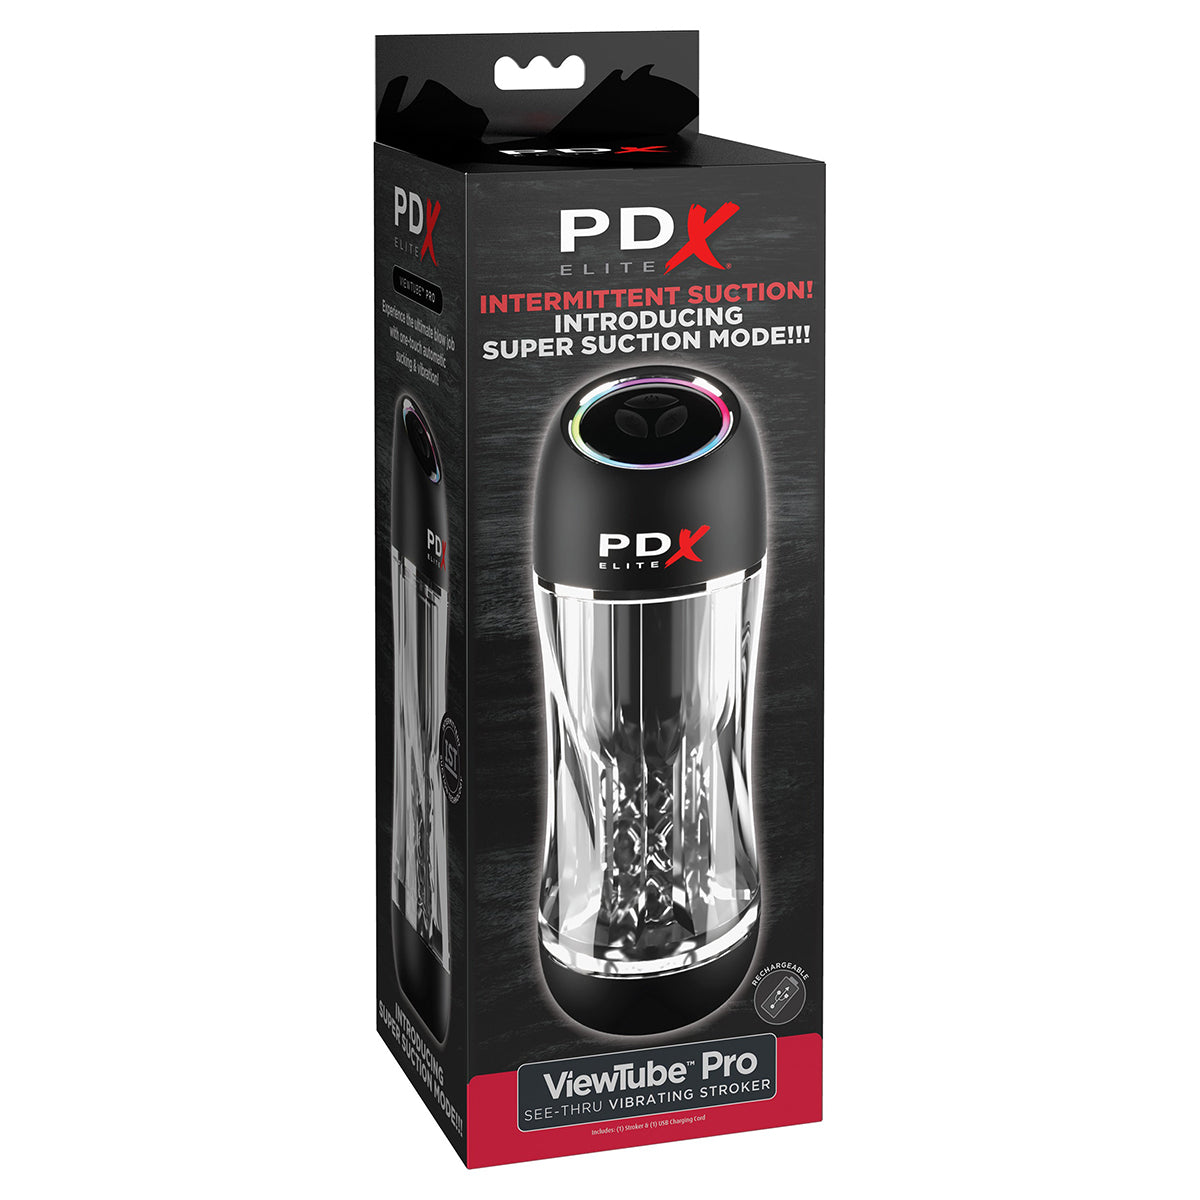 PDX Elite ViewTube Pro Super Suction Stroker